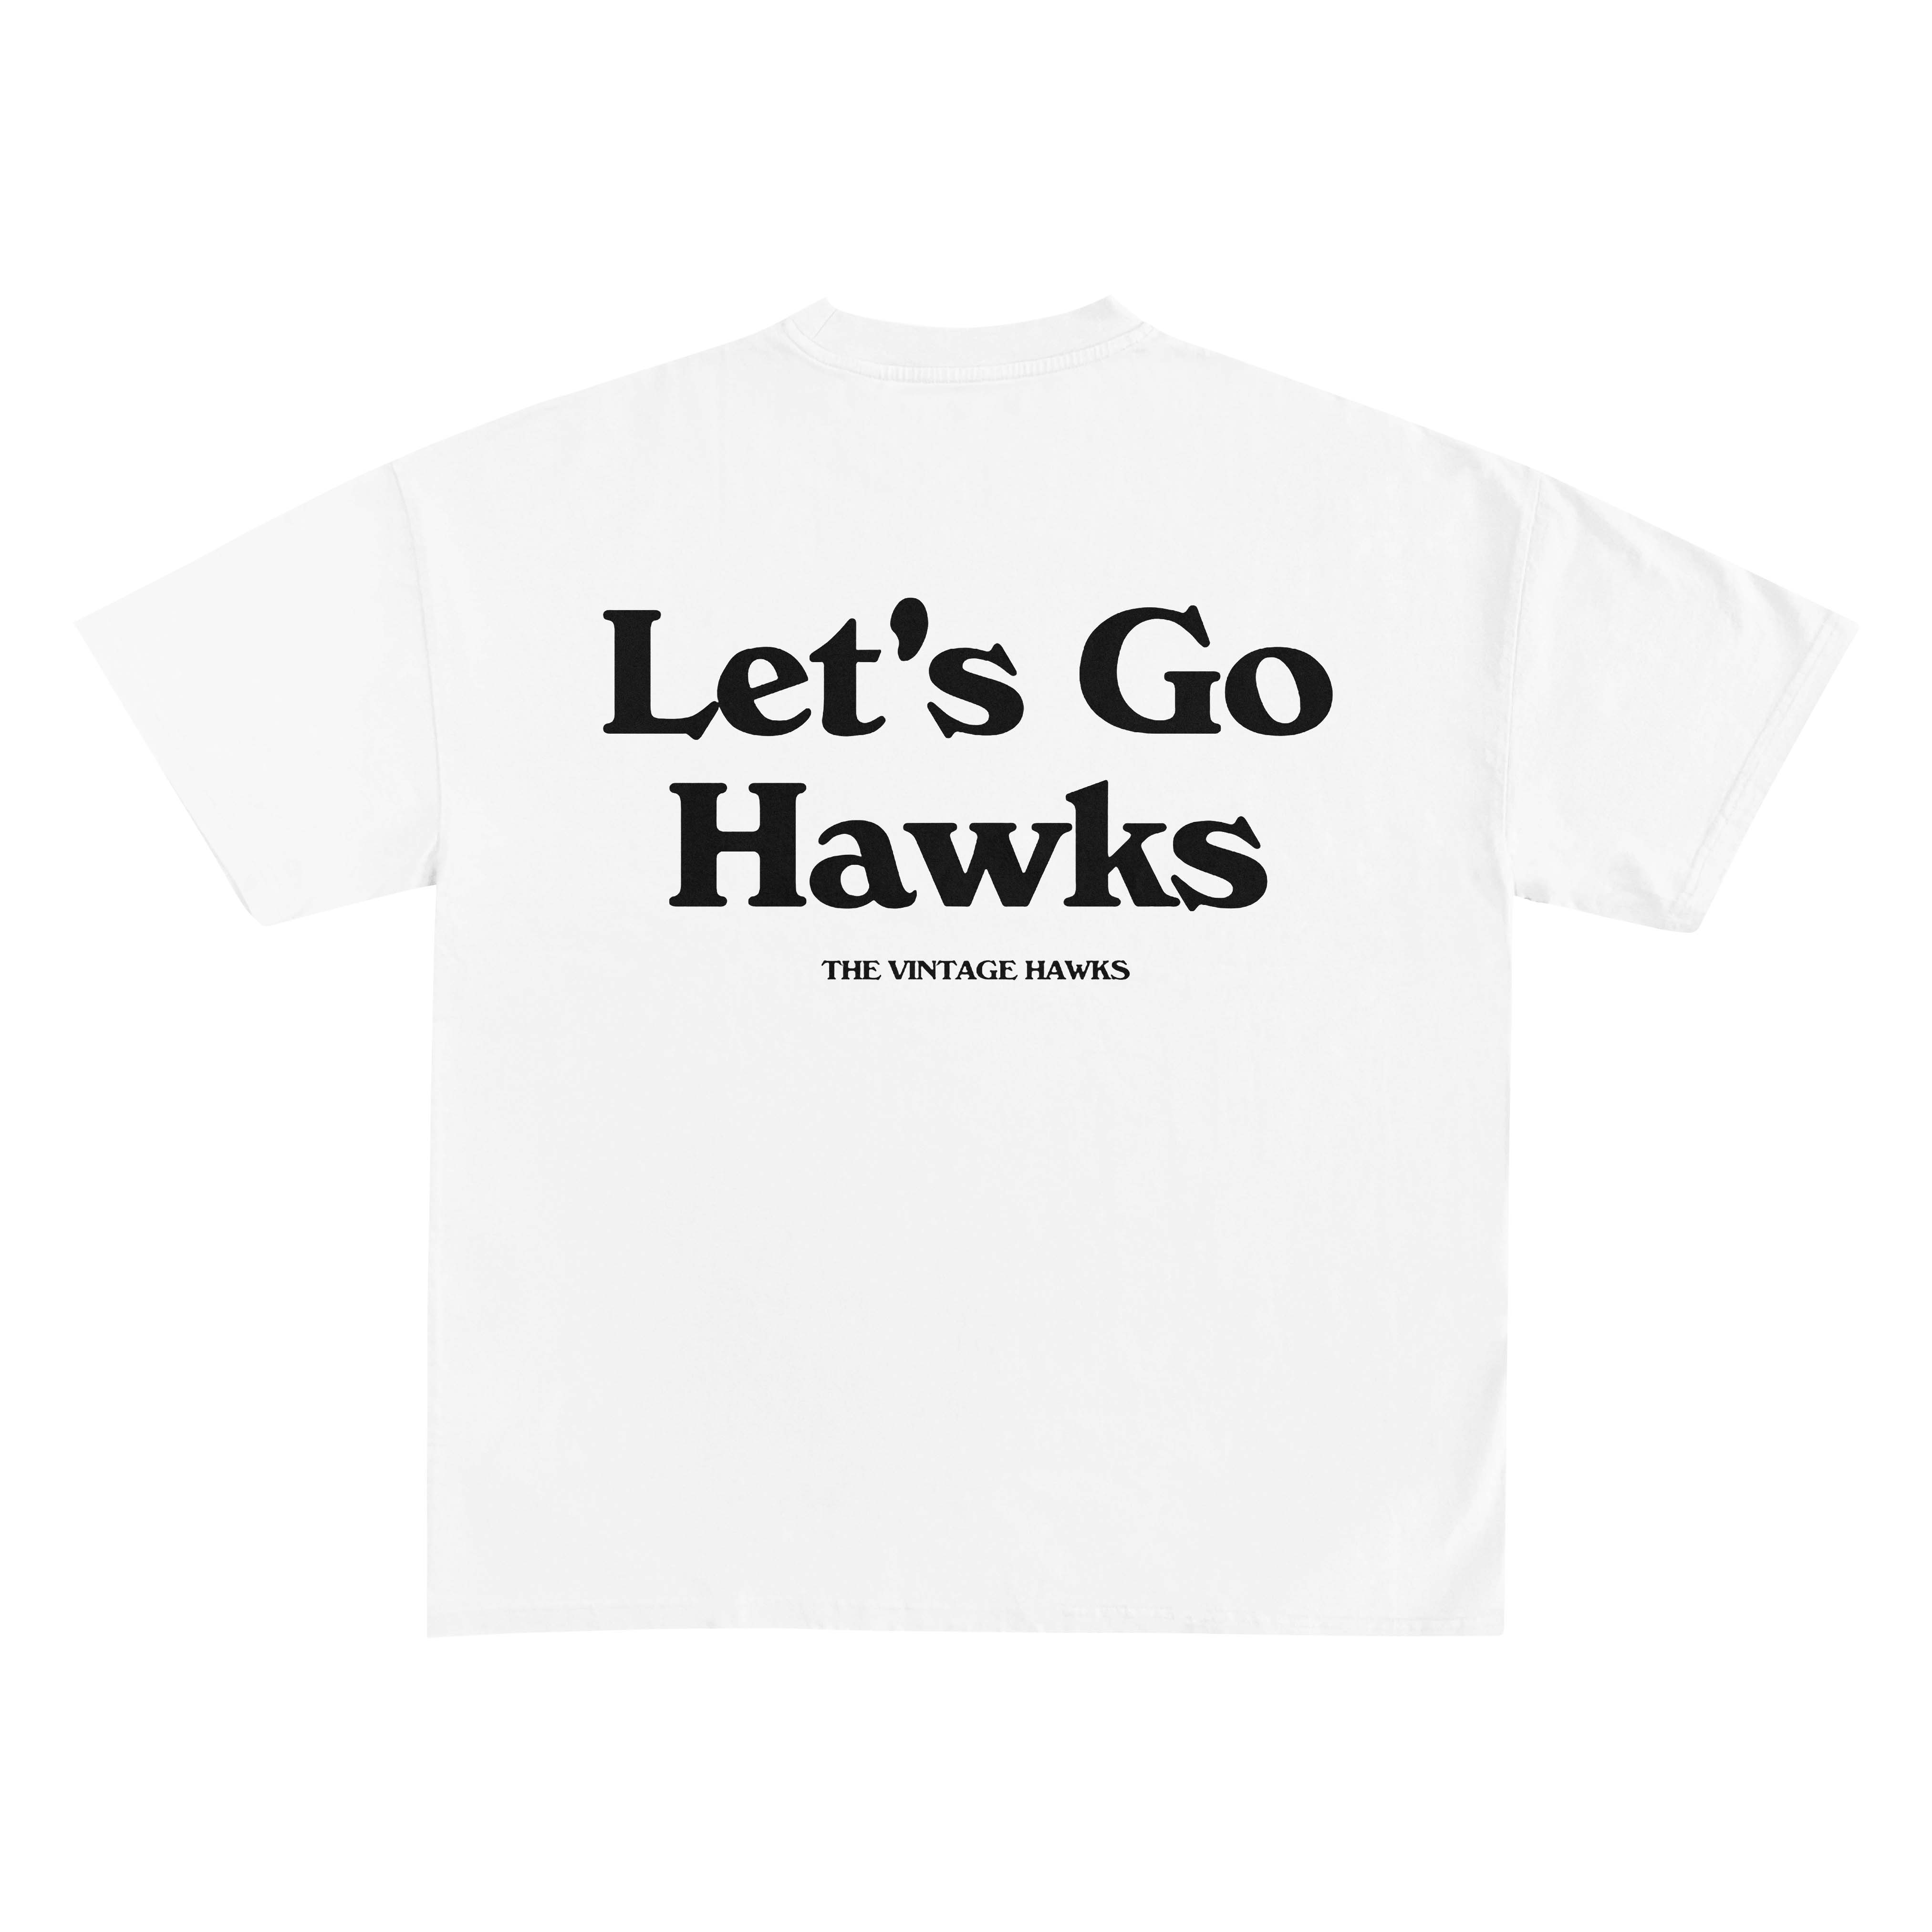 hawks shirts near me